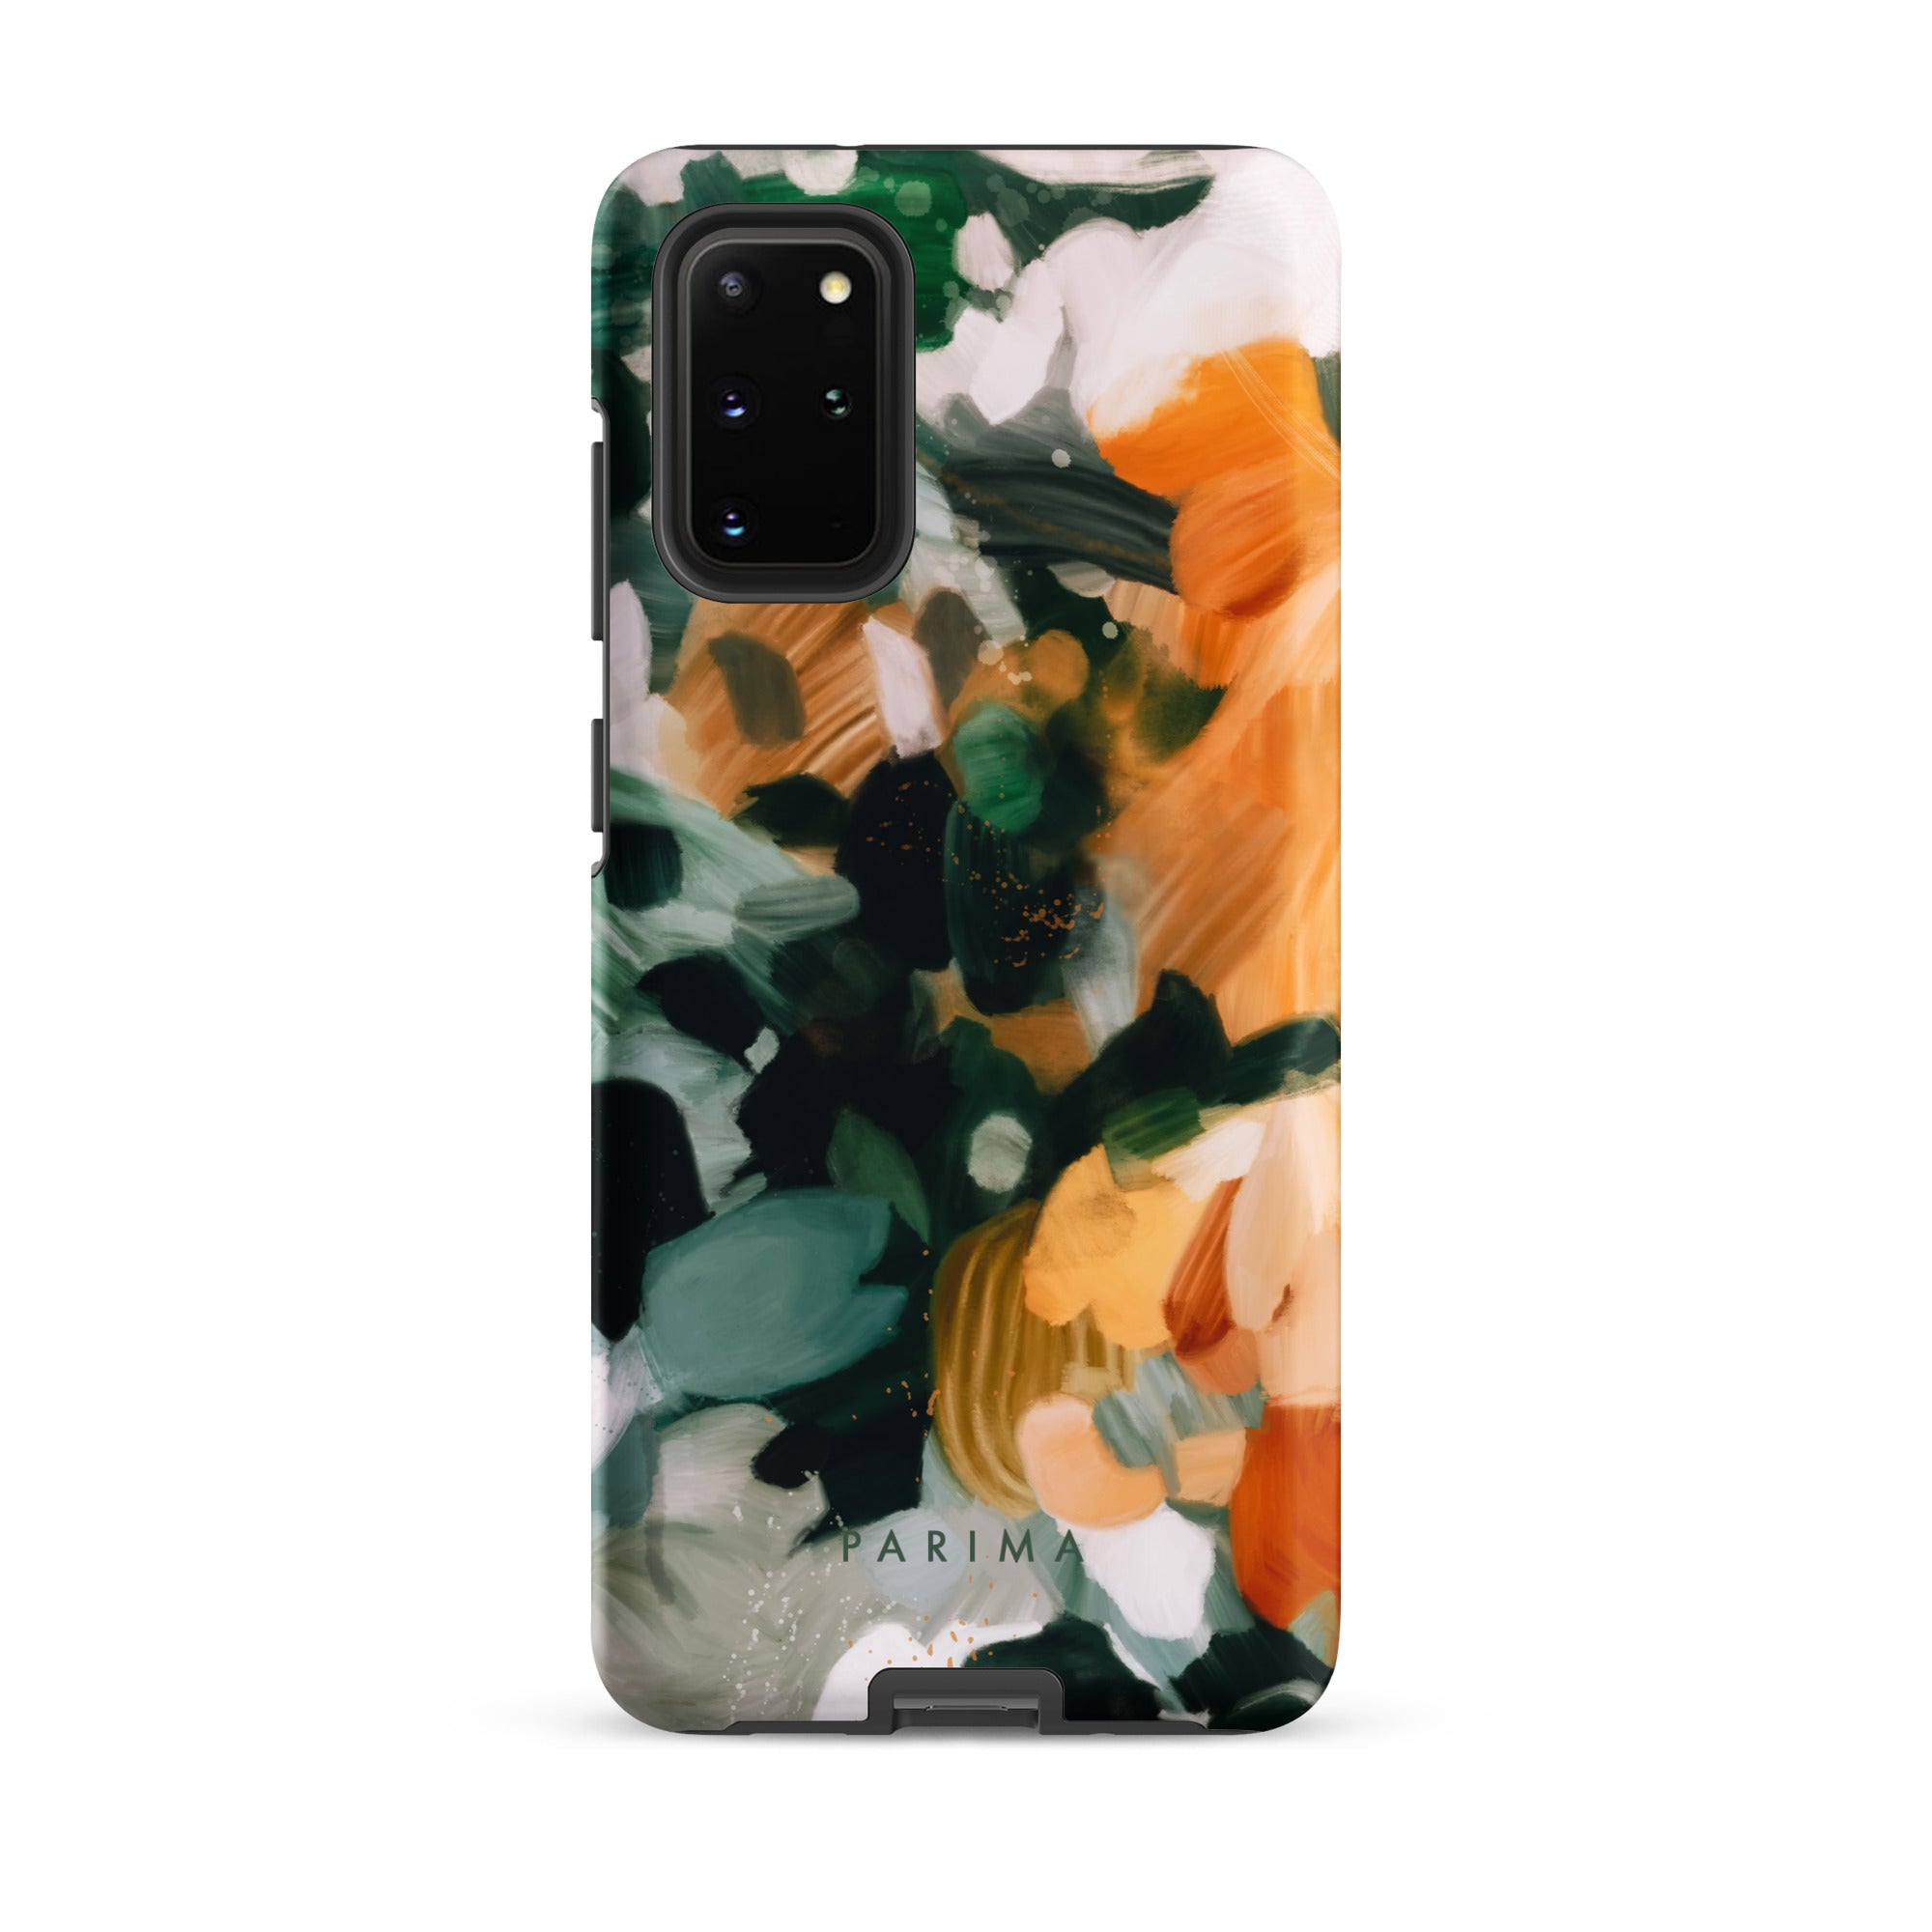 Aspen, green and orange abstract art on Samsung Galaxy S20 Plus tough case by Parima Studio